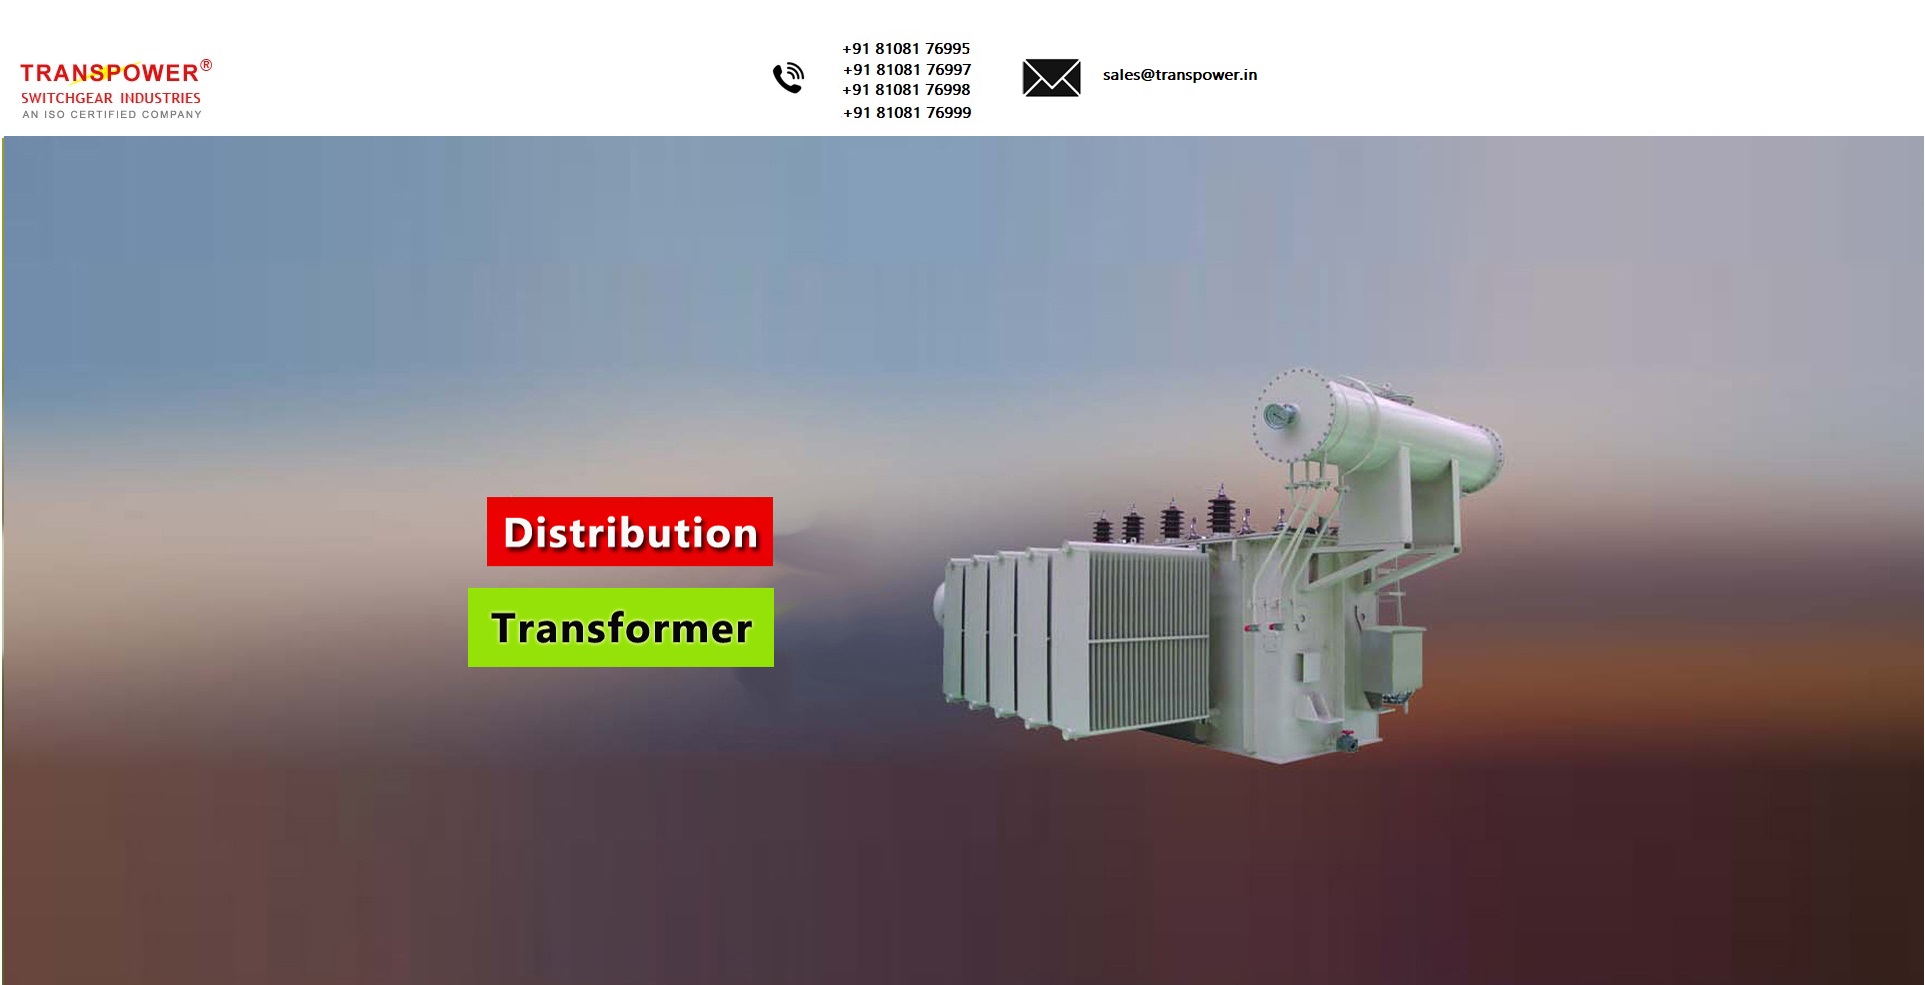 Transpower Switchgear Industries